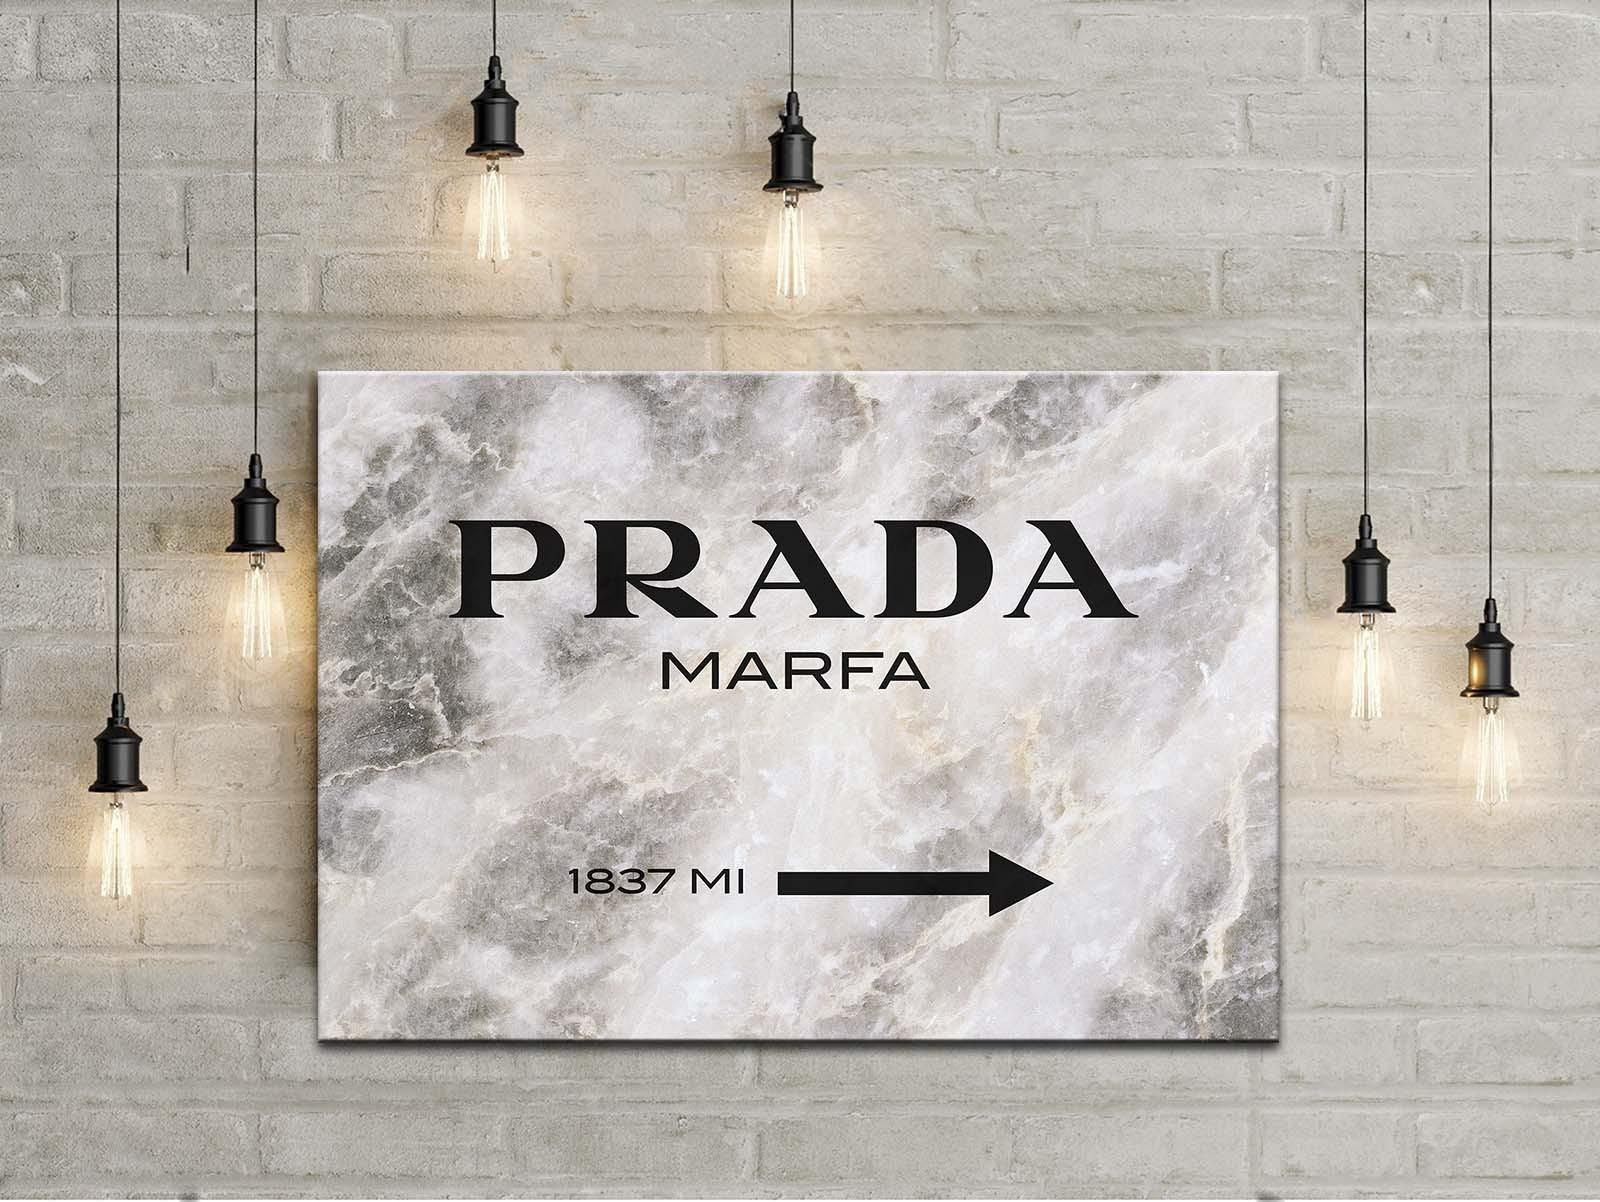 Prada Marfa Gossip Girl Sign, Painting Canvas Art, Wall Art, Home Intended For Prada Marfa Wall Art (View 19 of 20)